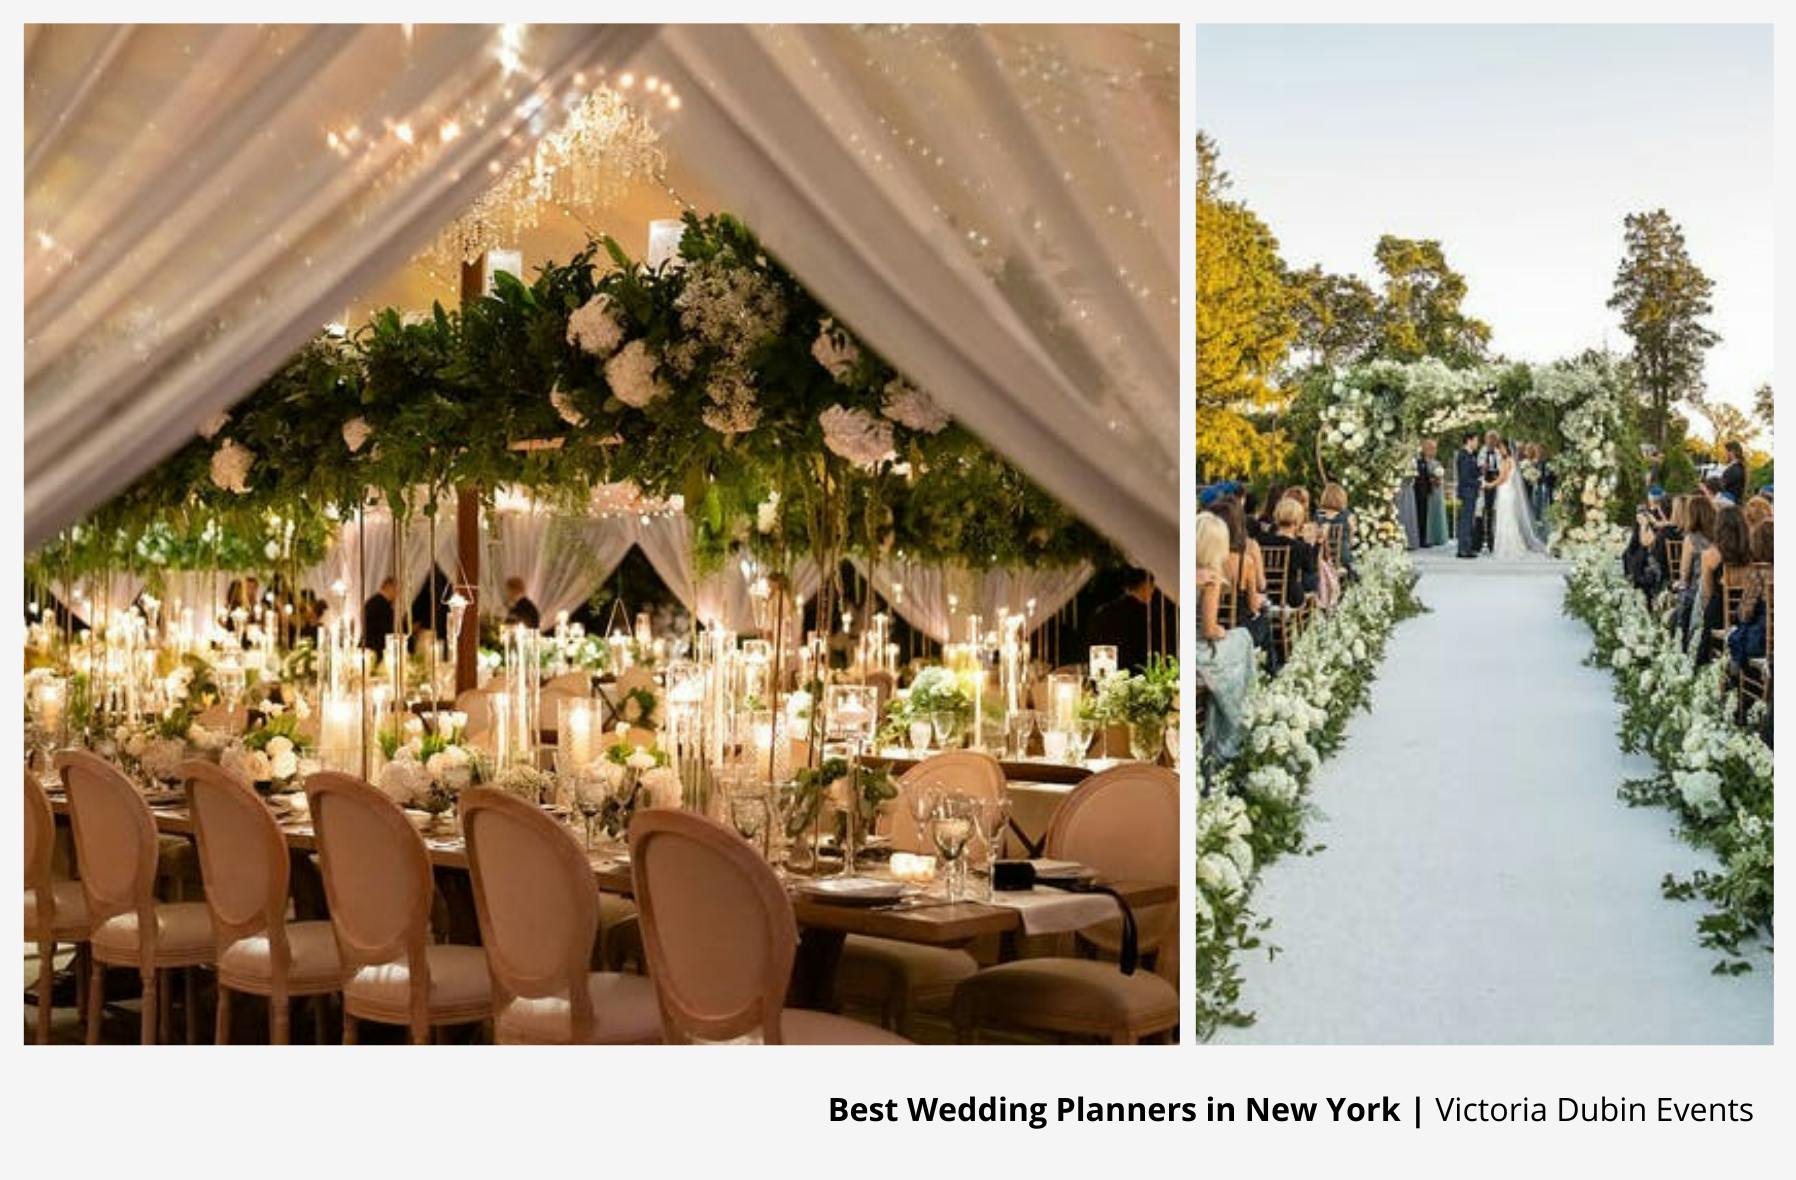 Find the Best New York Wedding Planners & New York Wedding Planning